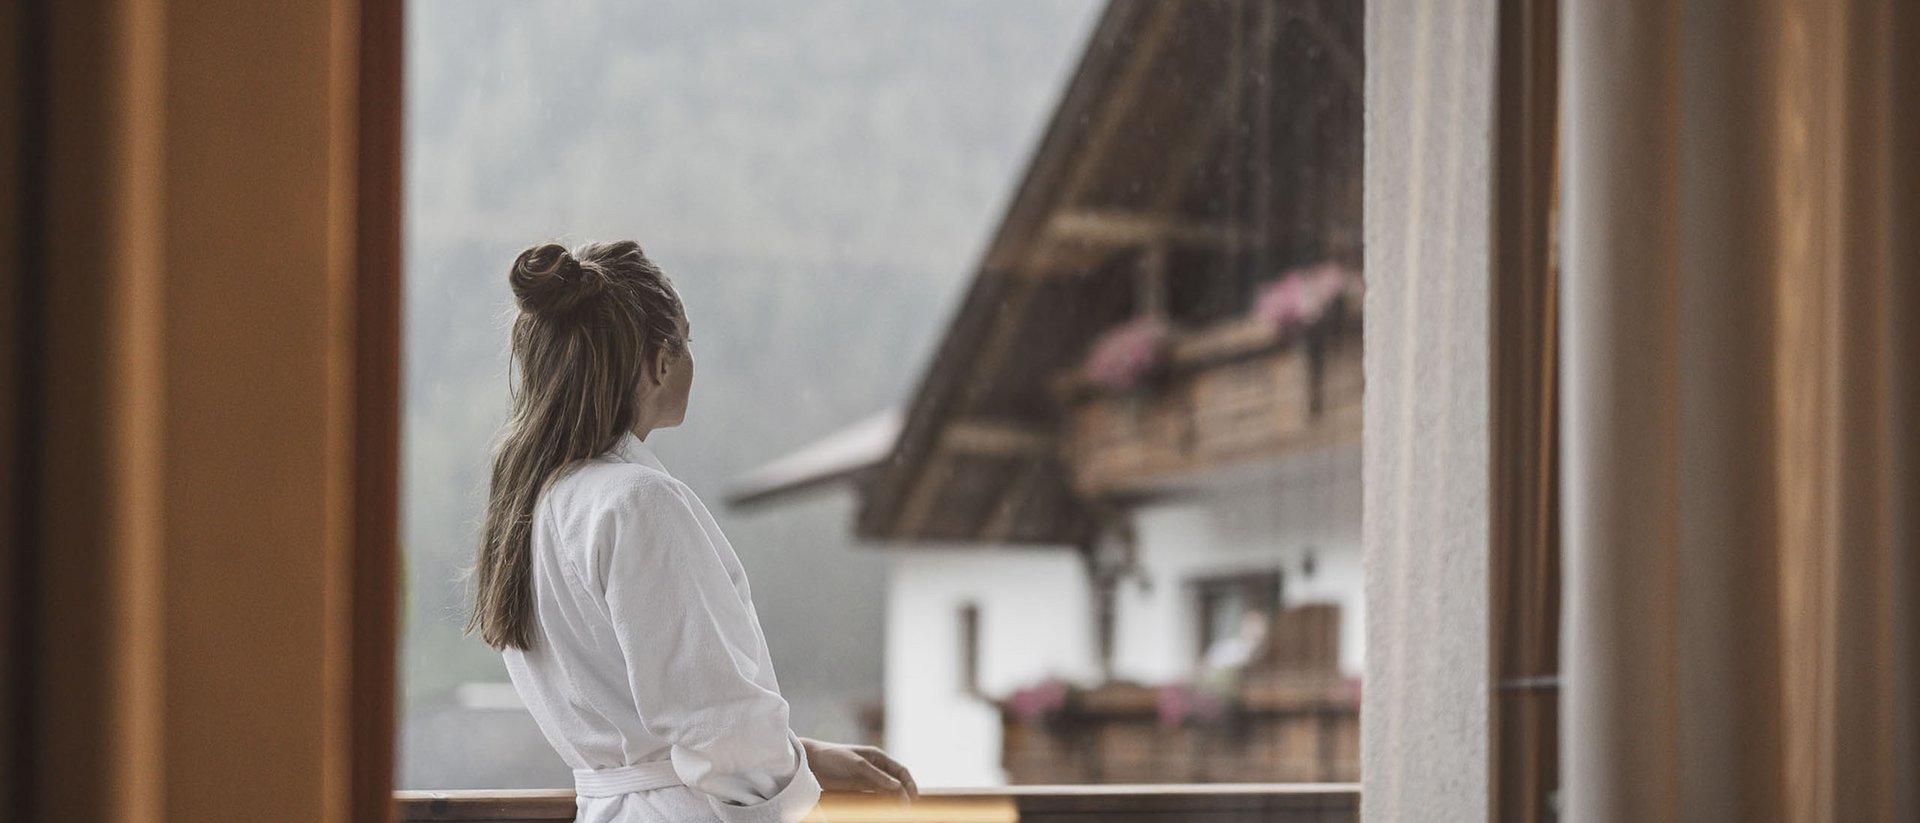 Winklerhotels: a nourishing yoga holiday in South Tyrol